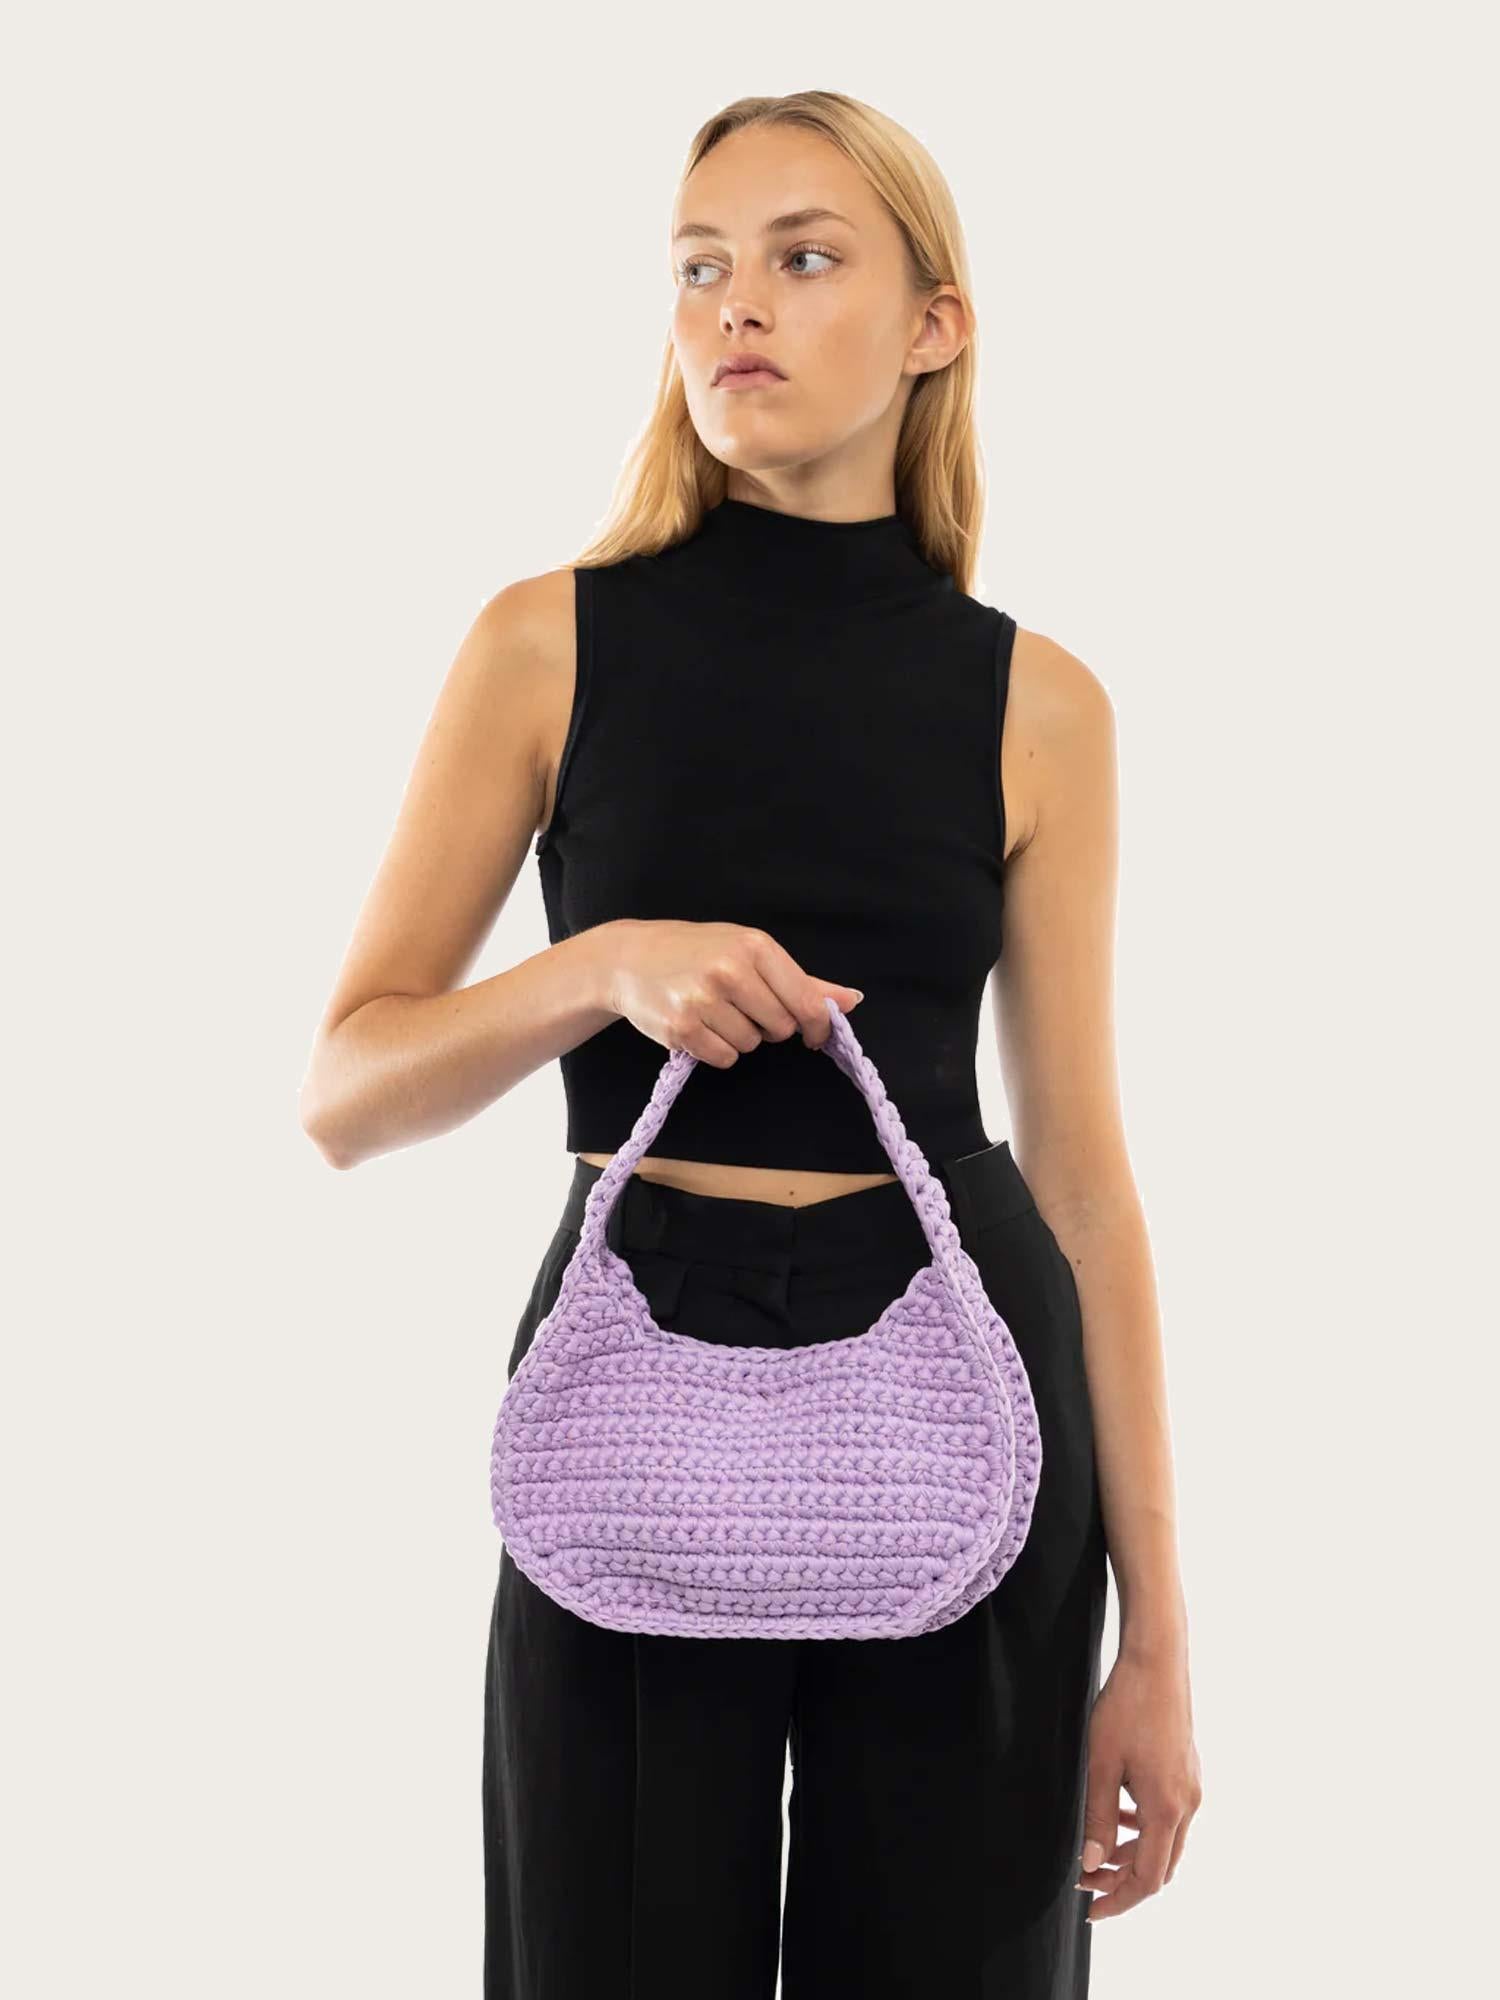 Sand Crochet - Blush Purple